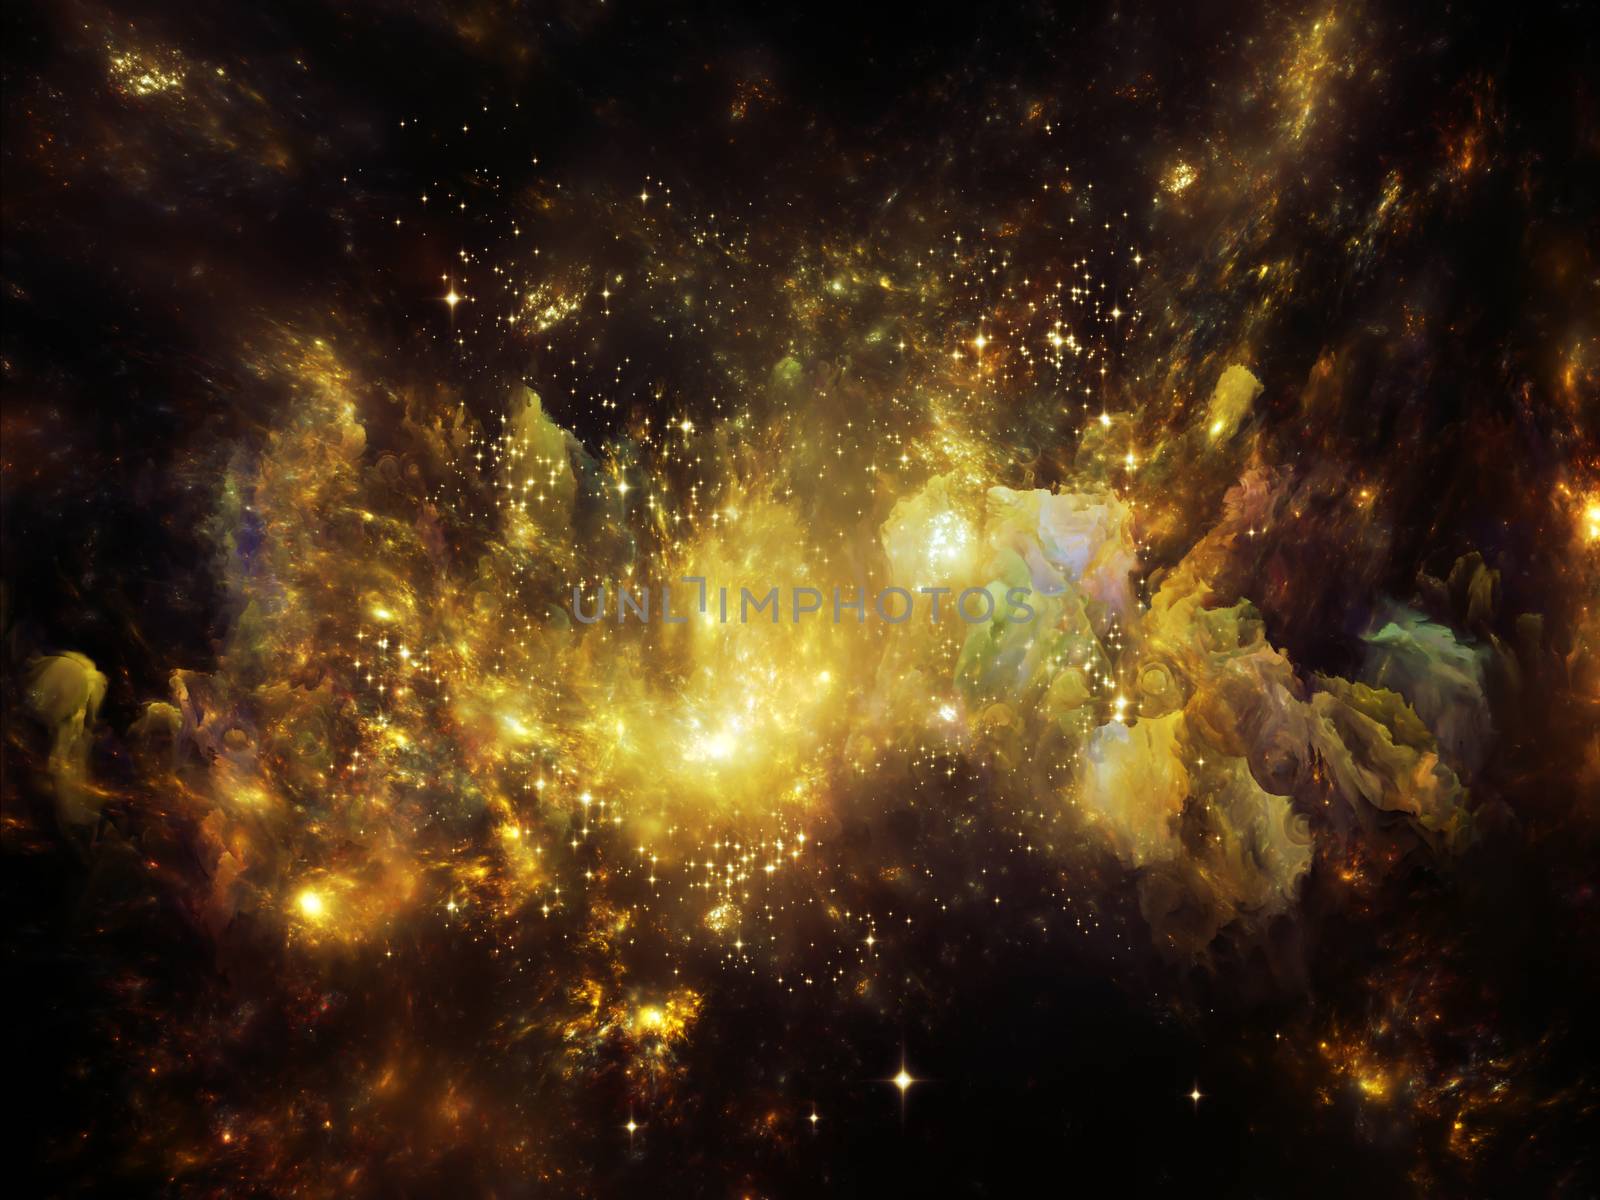 Nebula Illusions by agsandrew